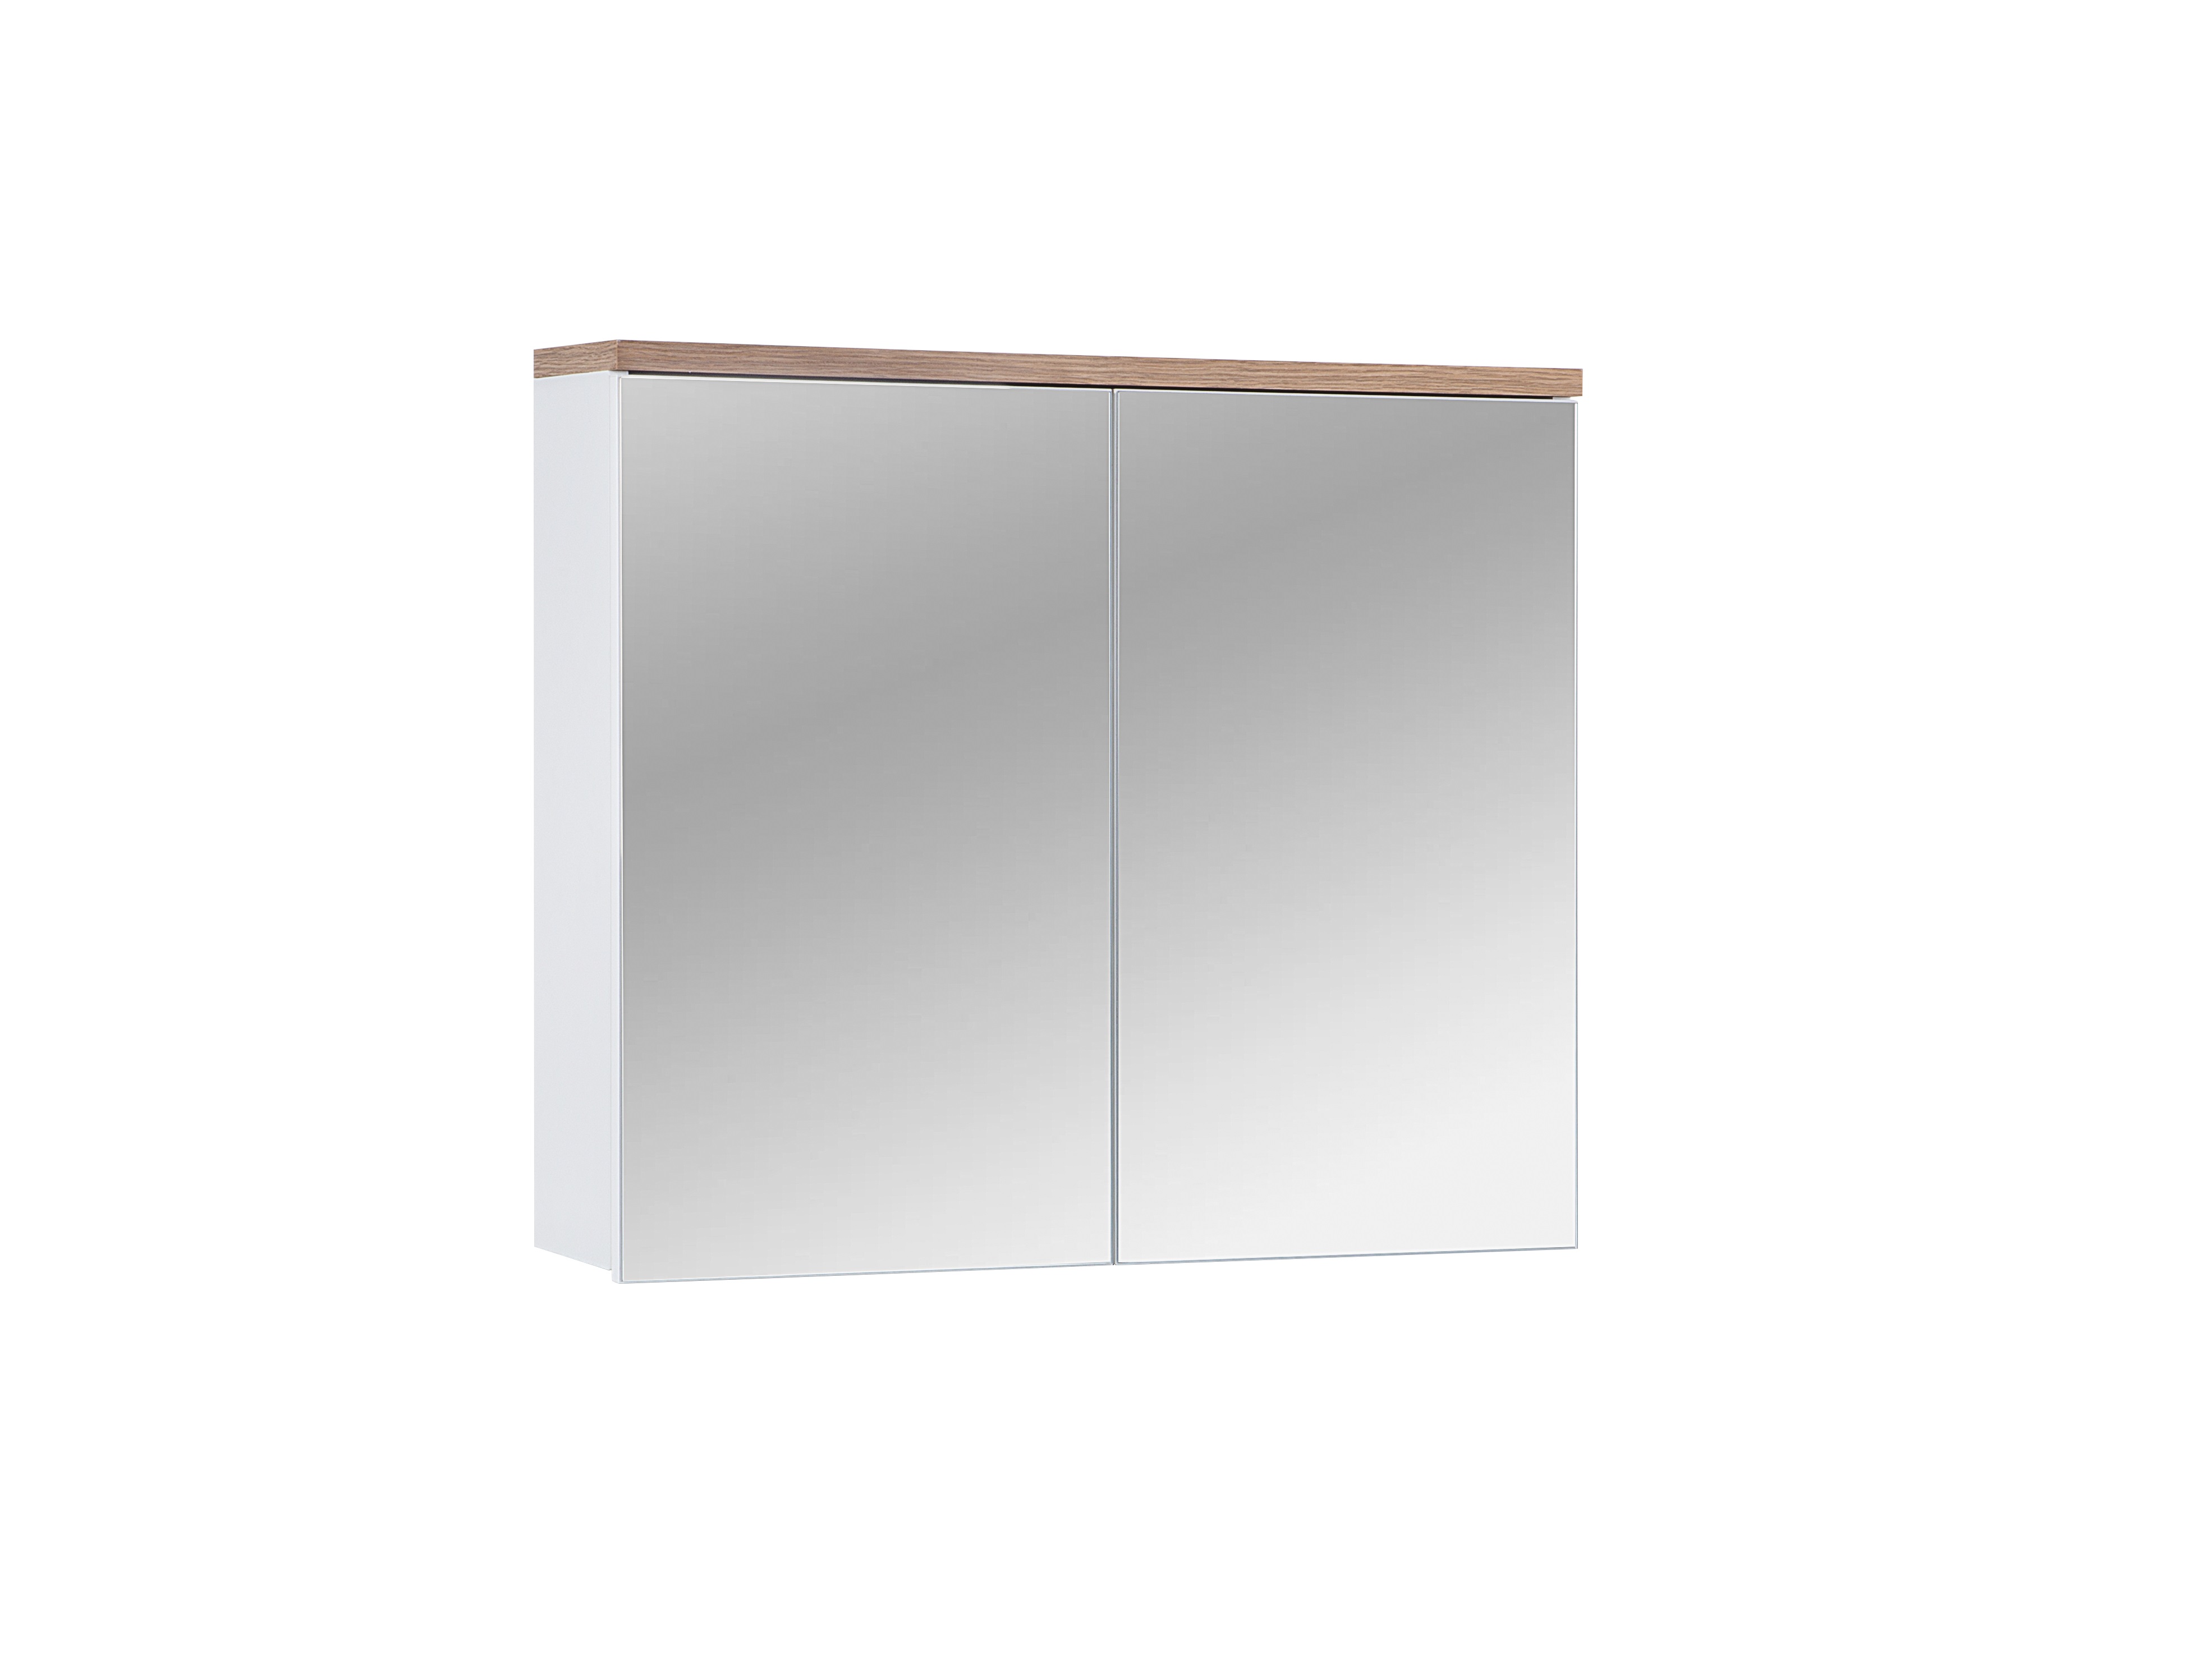 BALI BIAŁE 841 szafka z lustrem 2D/ White mirror cabinet 2D 80cm CU-COC-834012 FSC MIX 70%